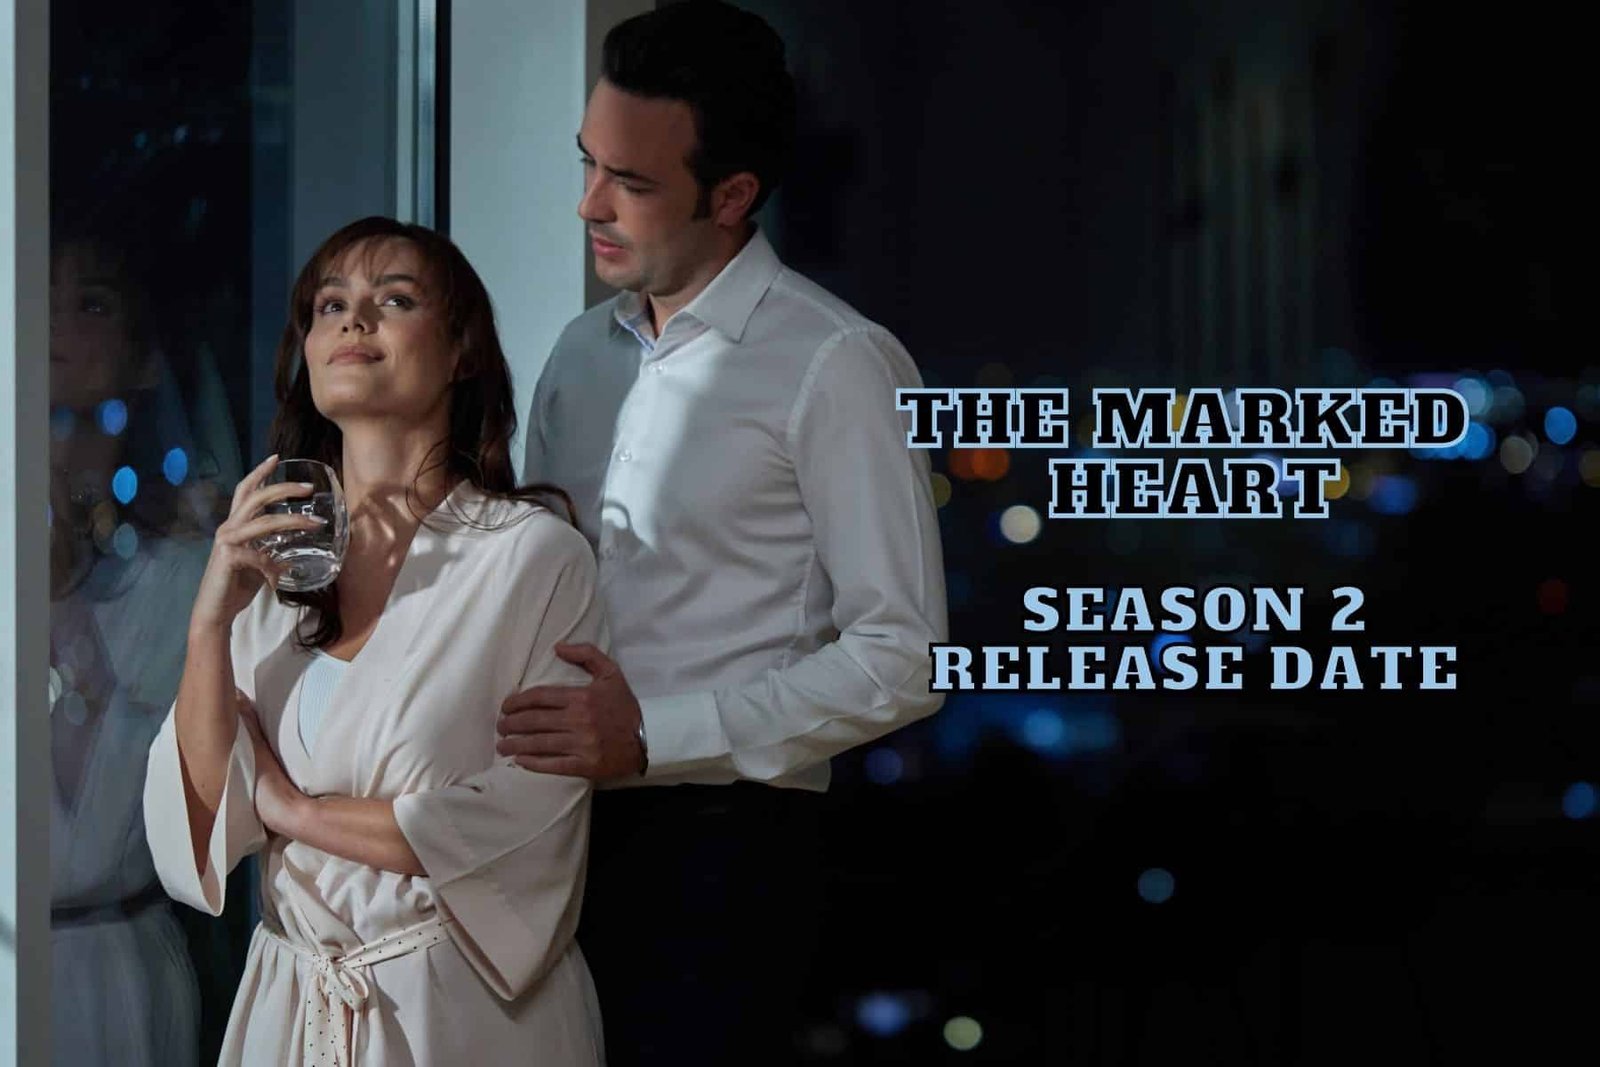 The Marked Heart Season 2 Release Date, Trailer - Is It Canceled?